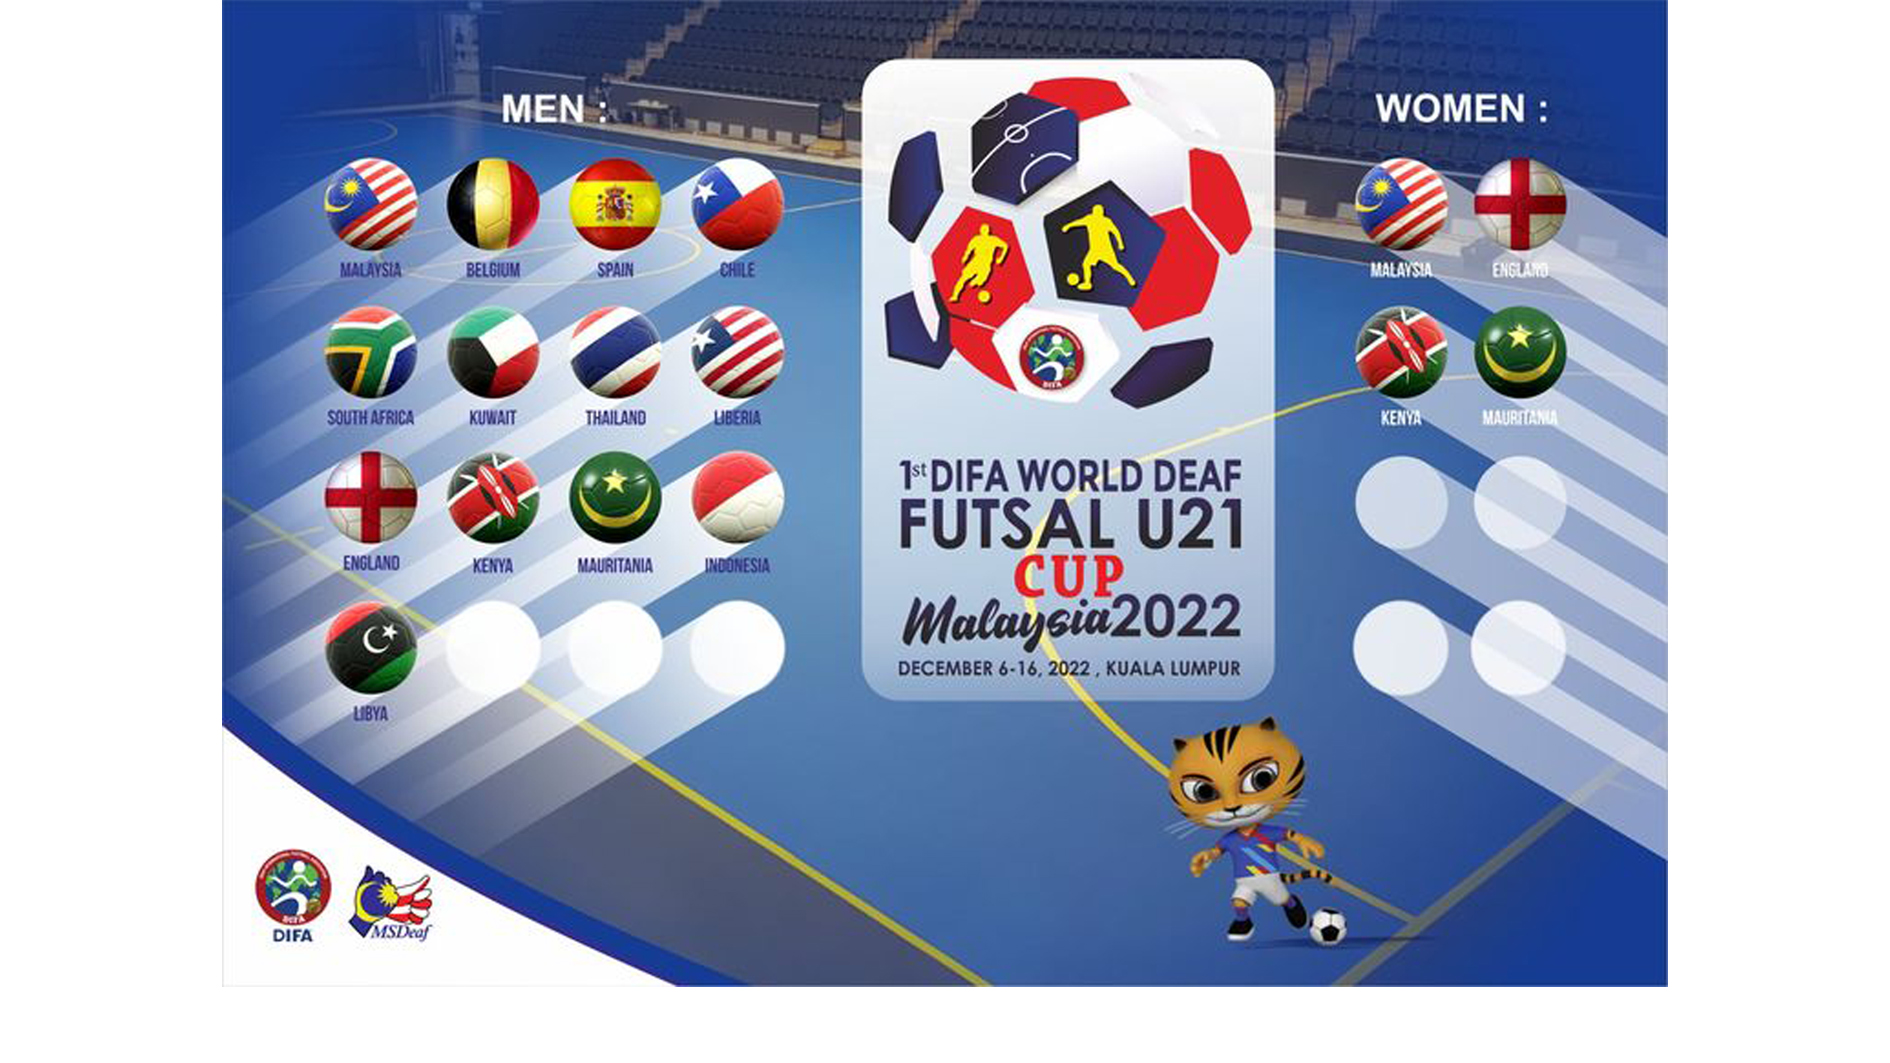 Information about World Deaf Futsal Cup U21 in Malaysia